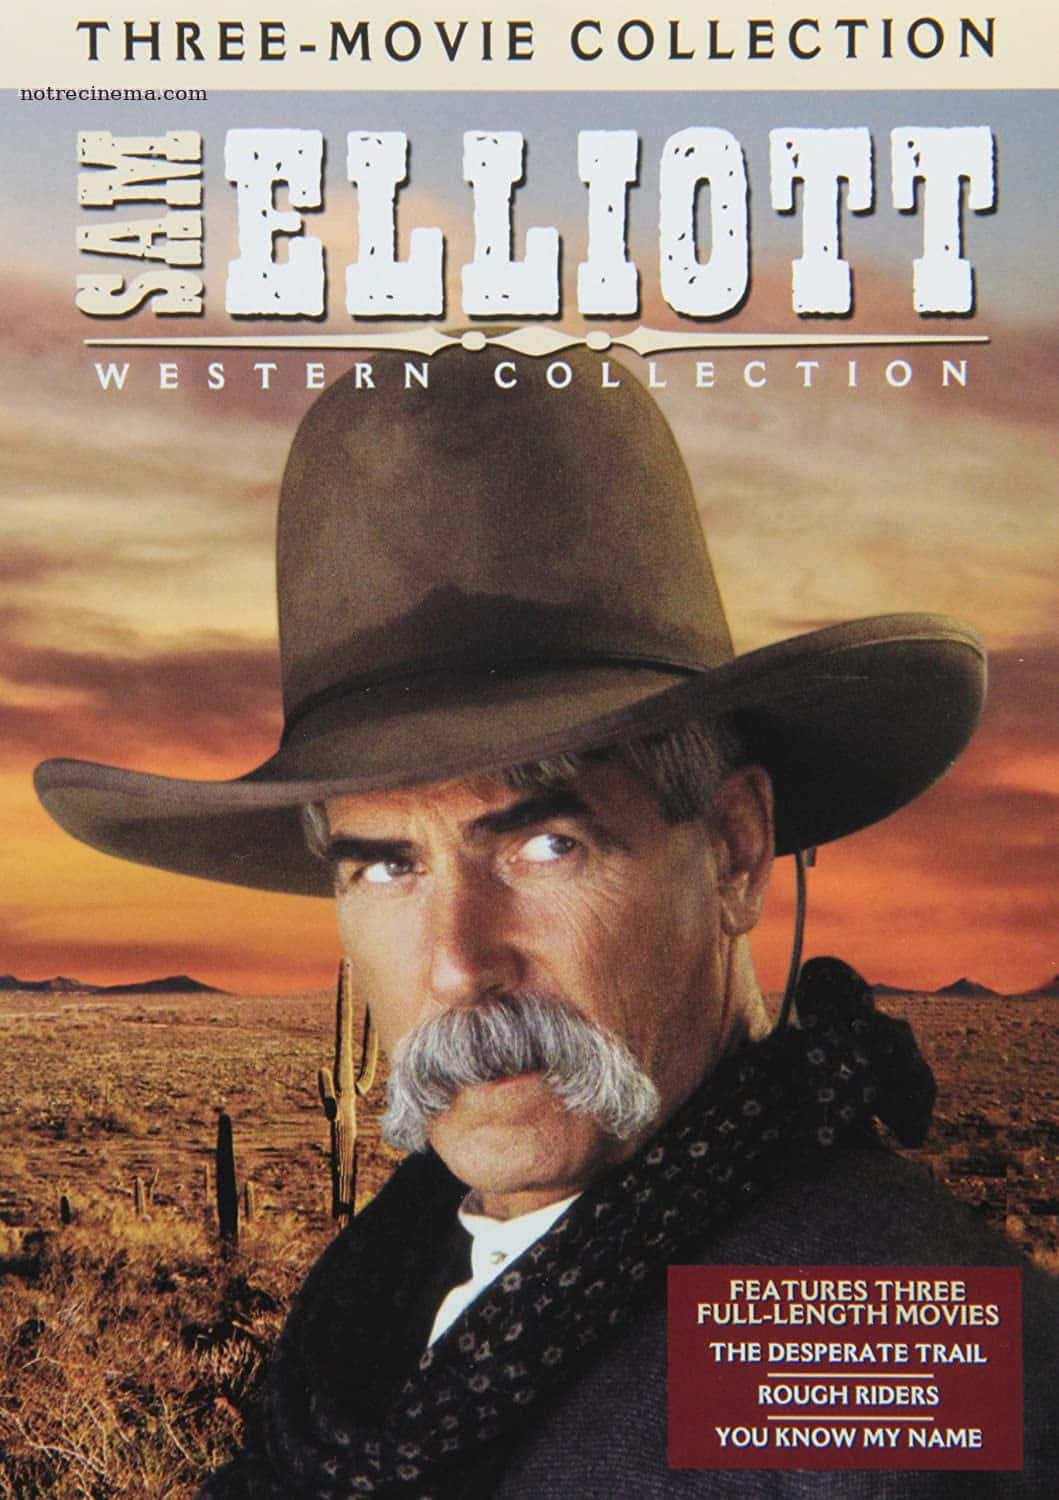 Iconic American actor Sam Elliott in a classic Western film scene. Wallpaper